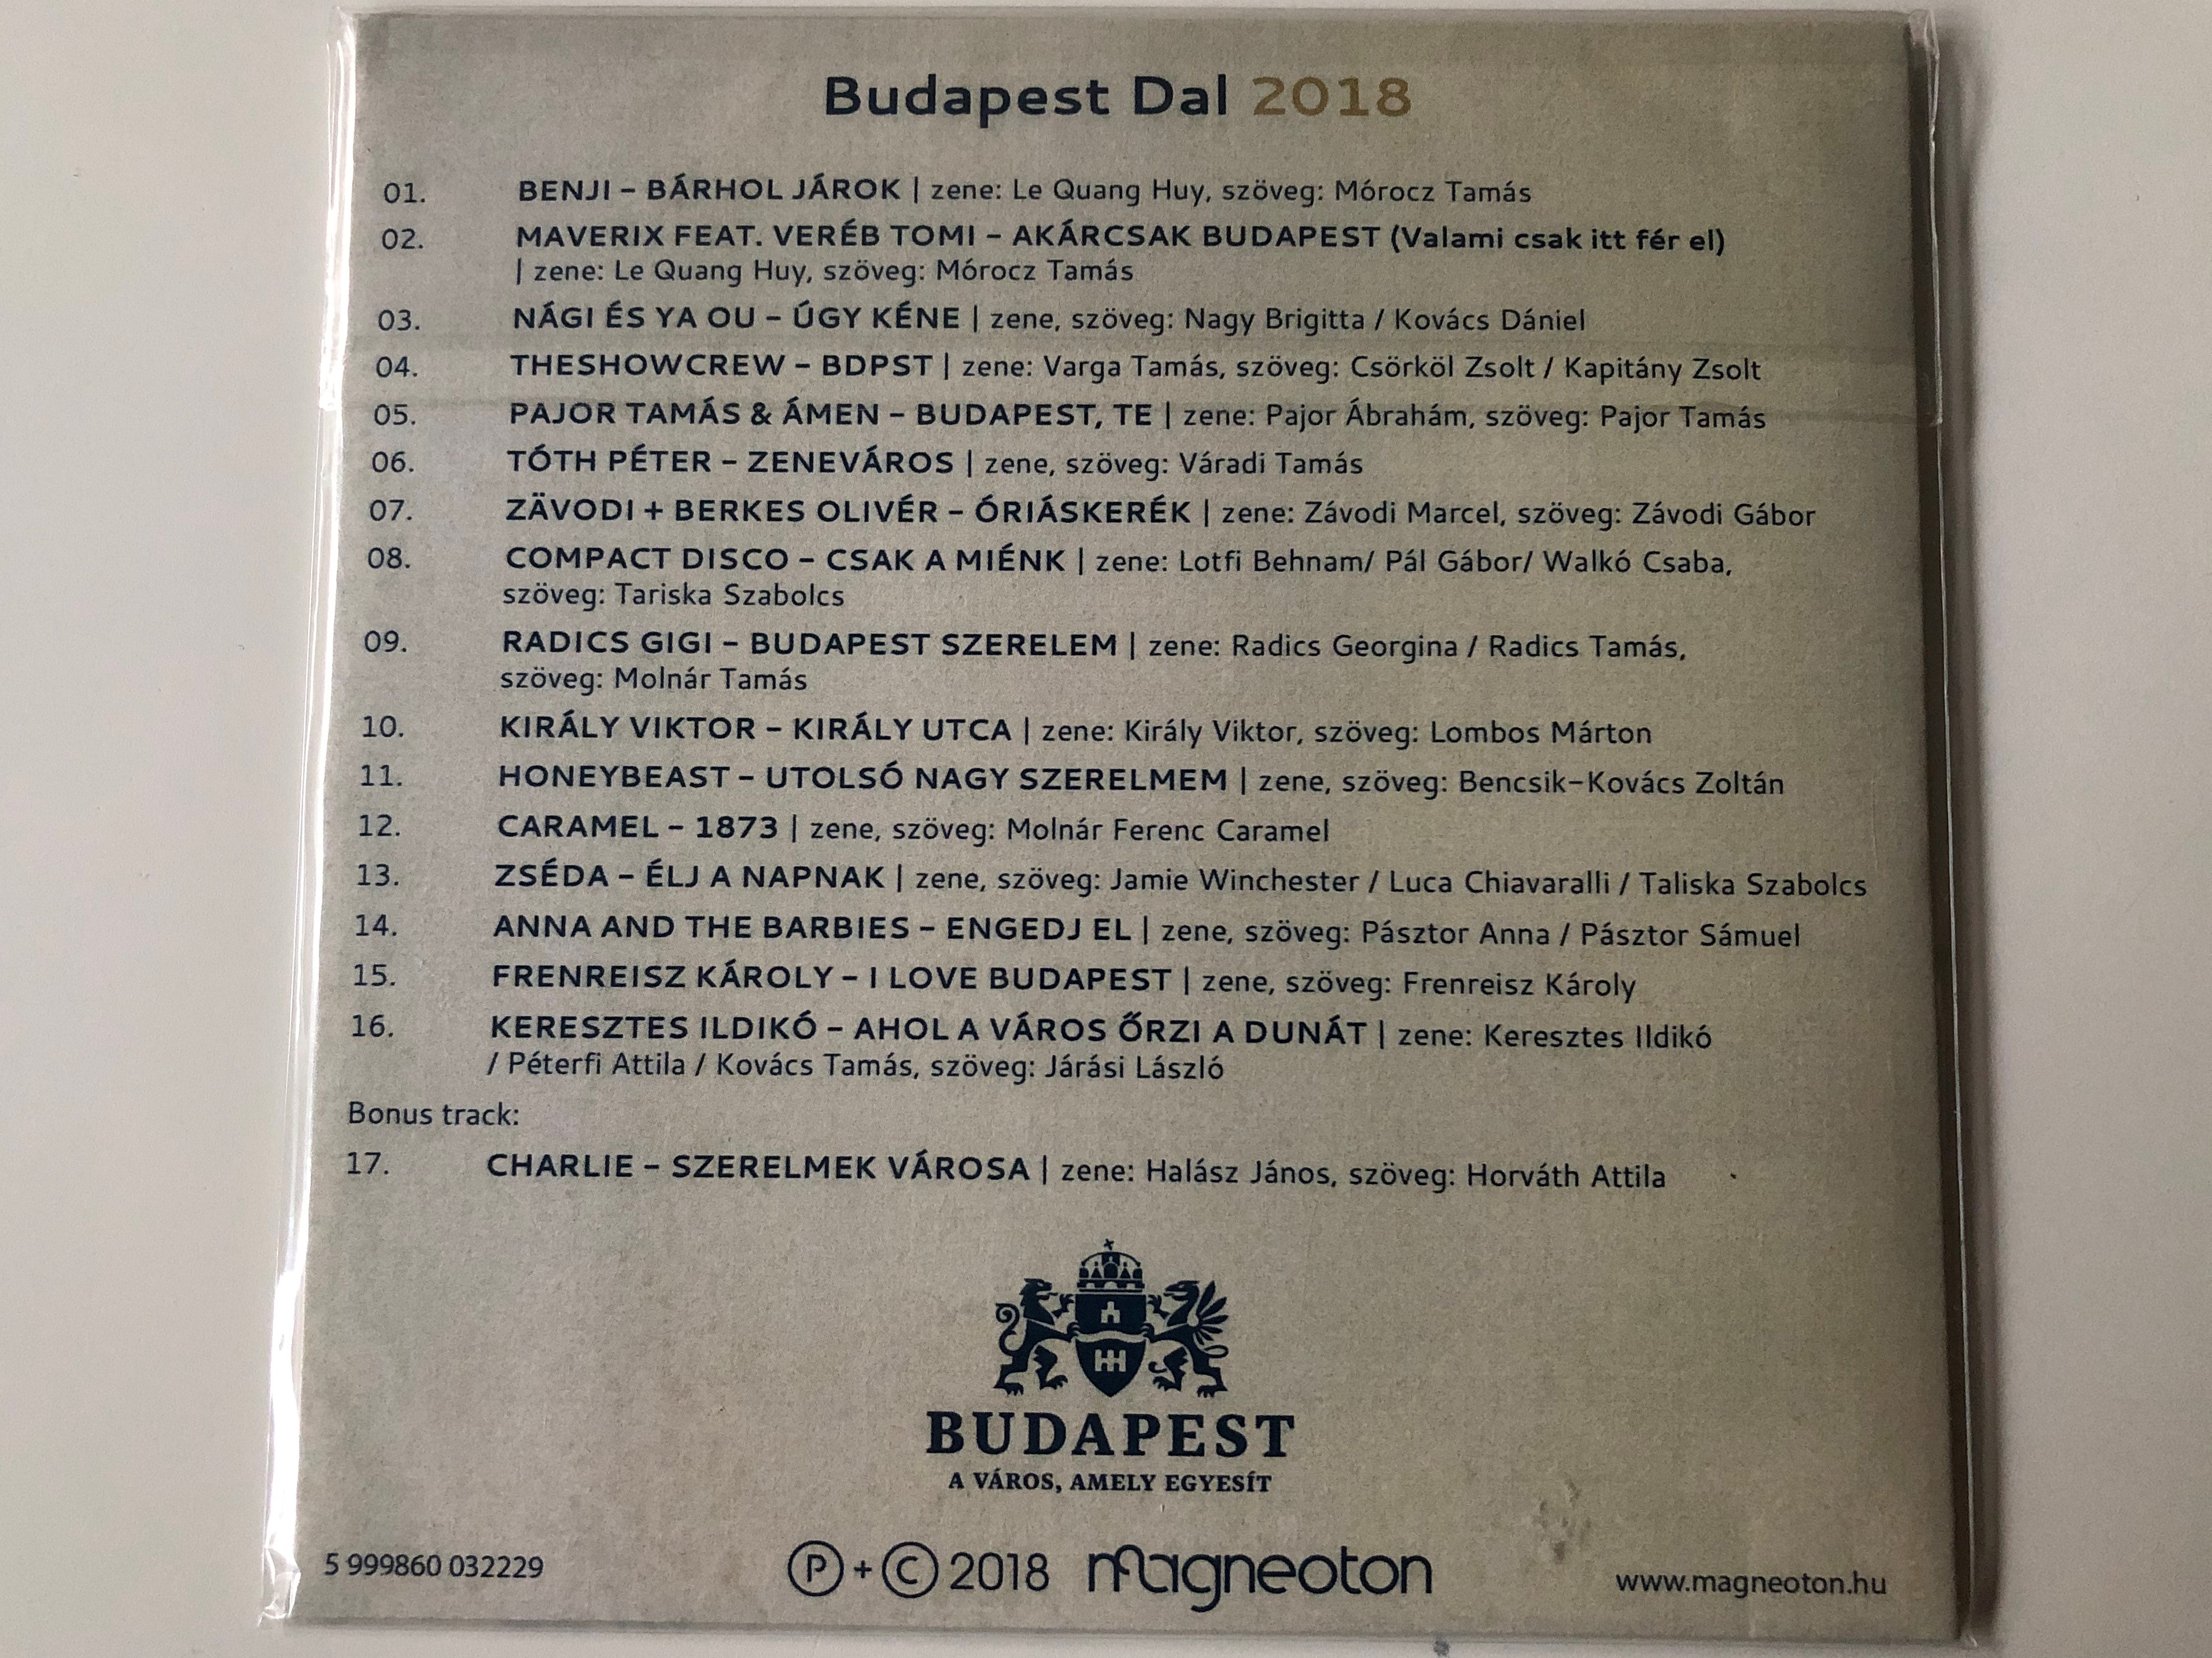 budapest-dal-2018-magneoton-audio-cd-2018-5999860032229-2-.jpg